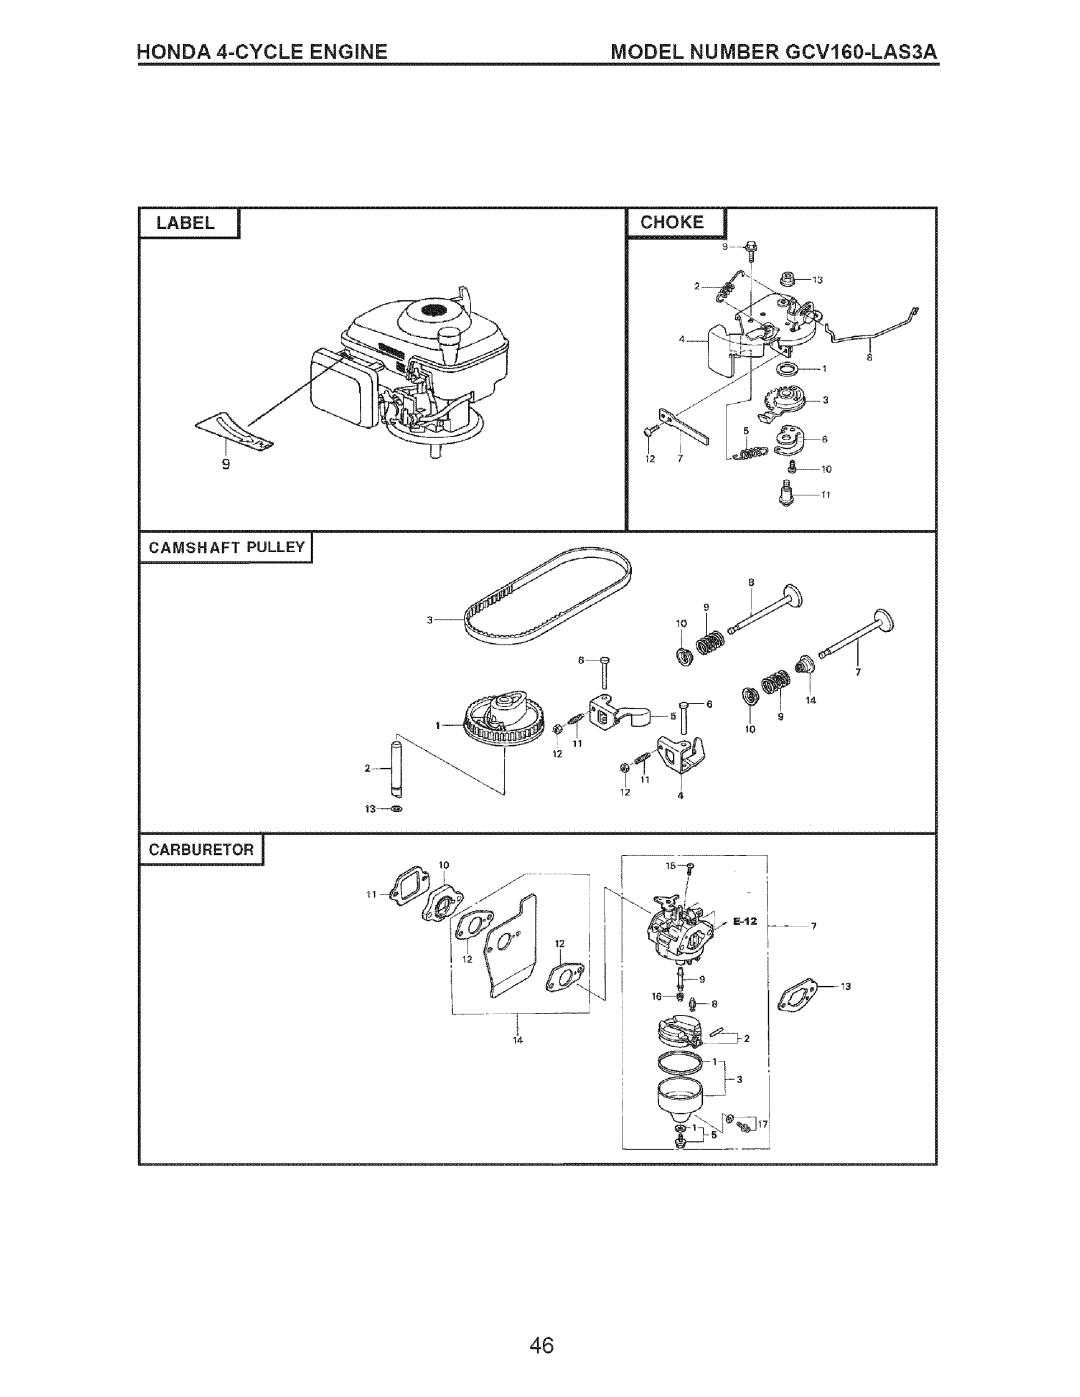 Craftsman 917.371812 owner manual HONDA 4=CYCLE ENGINE, MODEL NUMBER GCV160-LAS3A, Label, Choke, Camshaft Pulley 